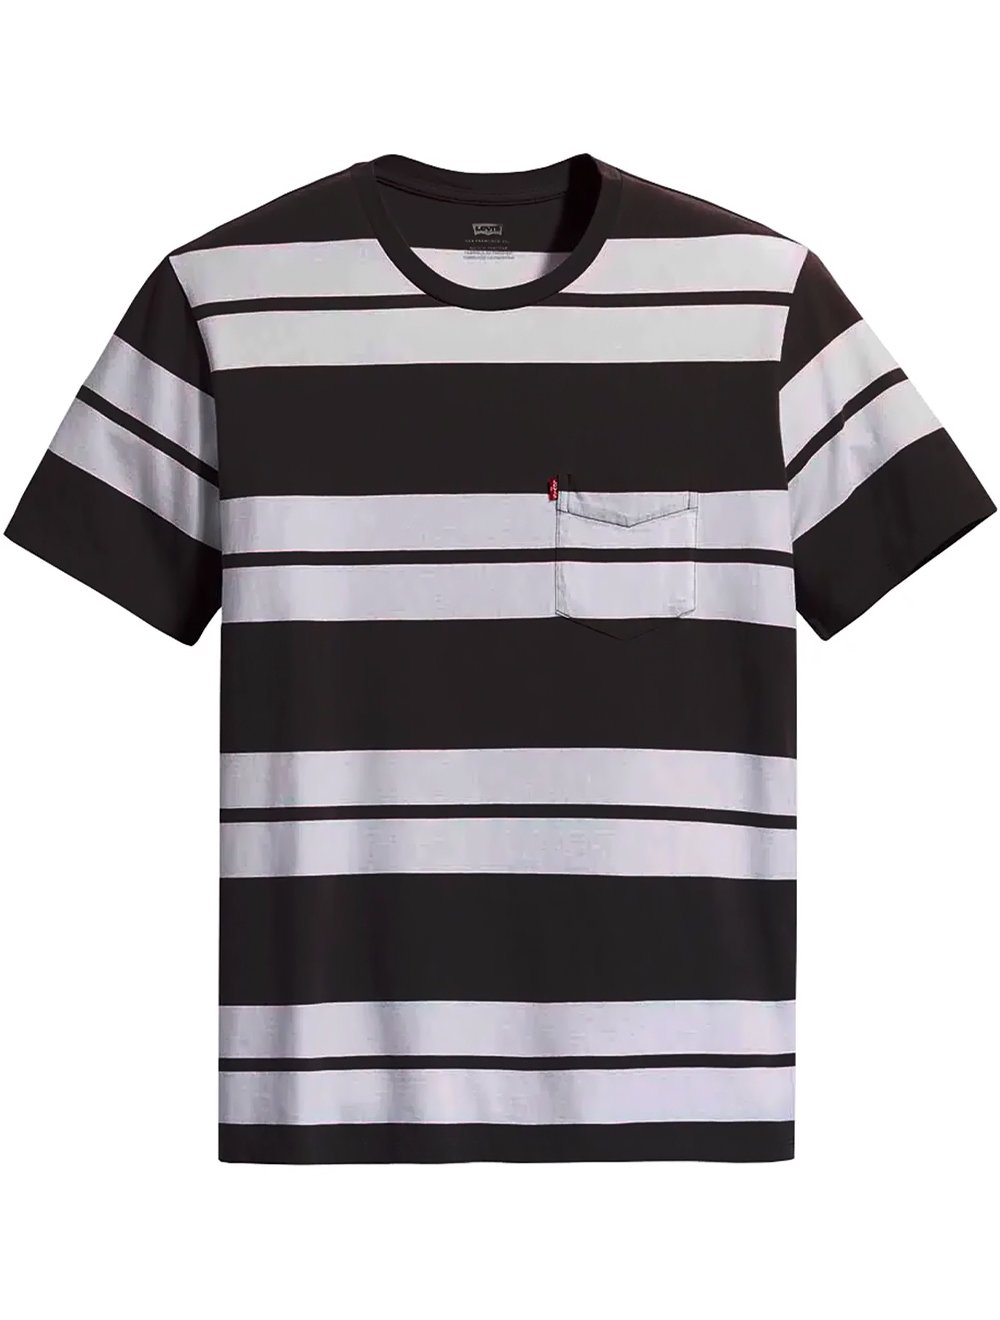 Camiseta Levis Masculina Classic Pocket Striped Grafite e Branco